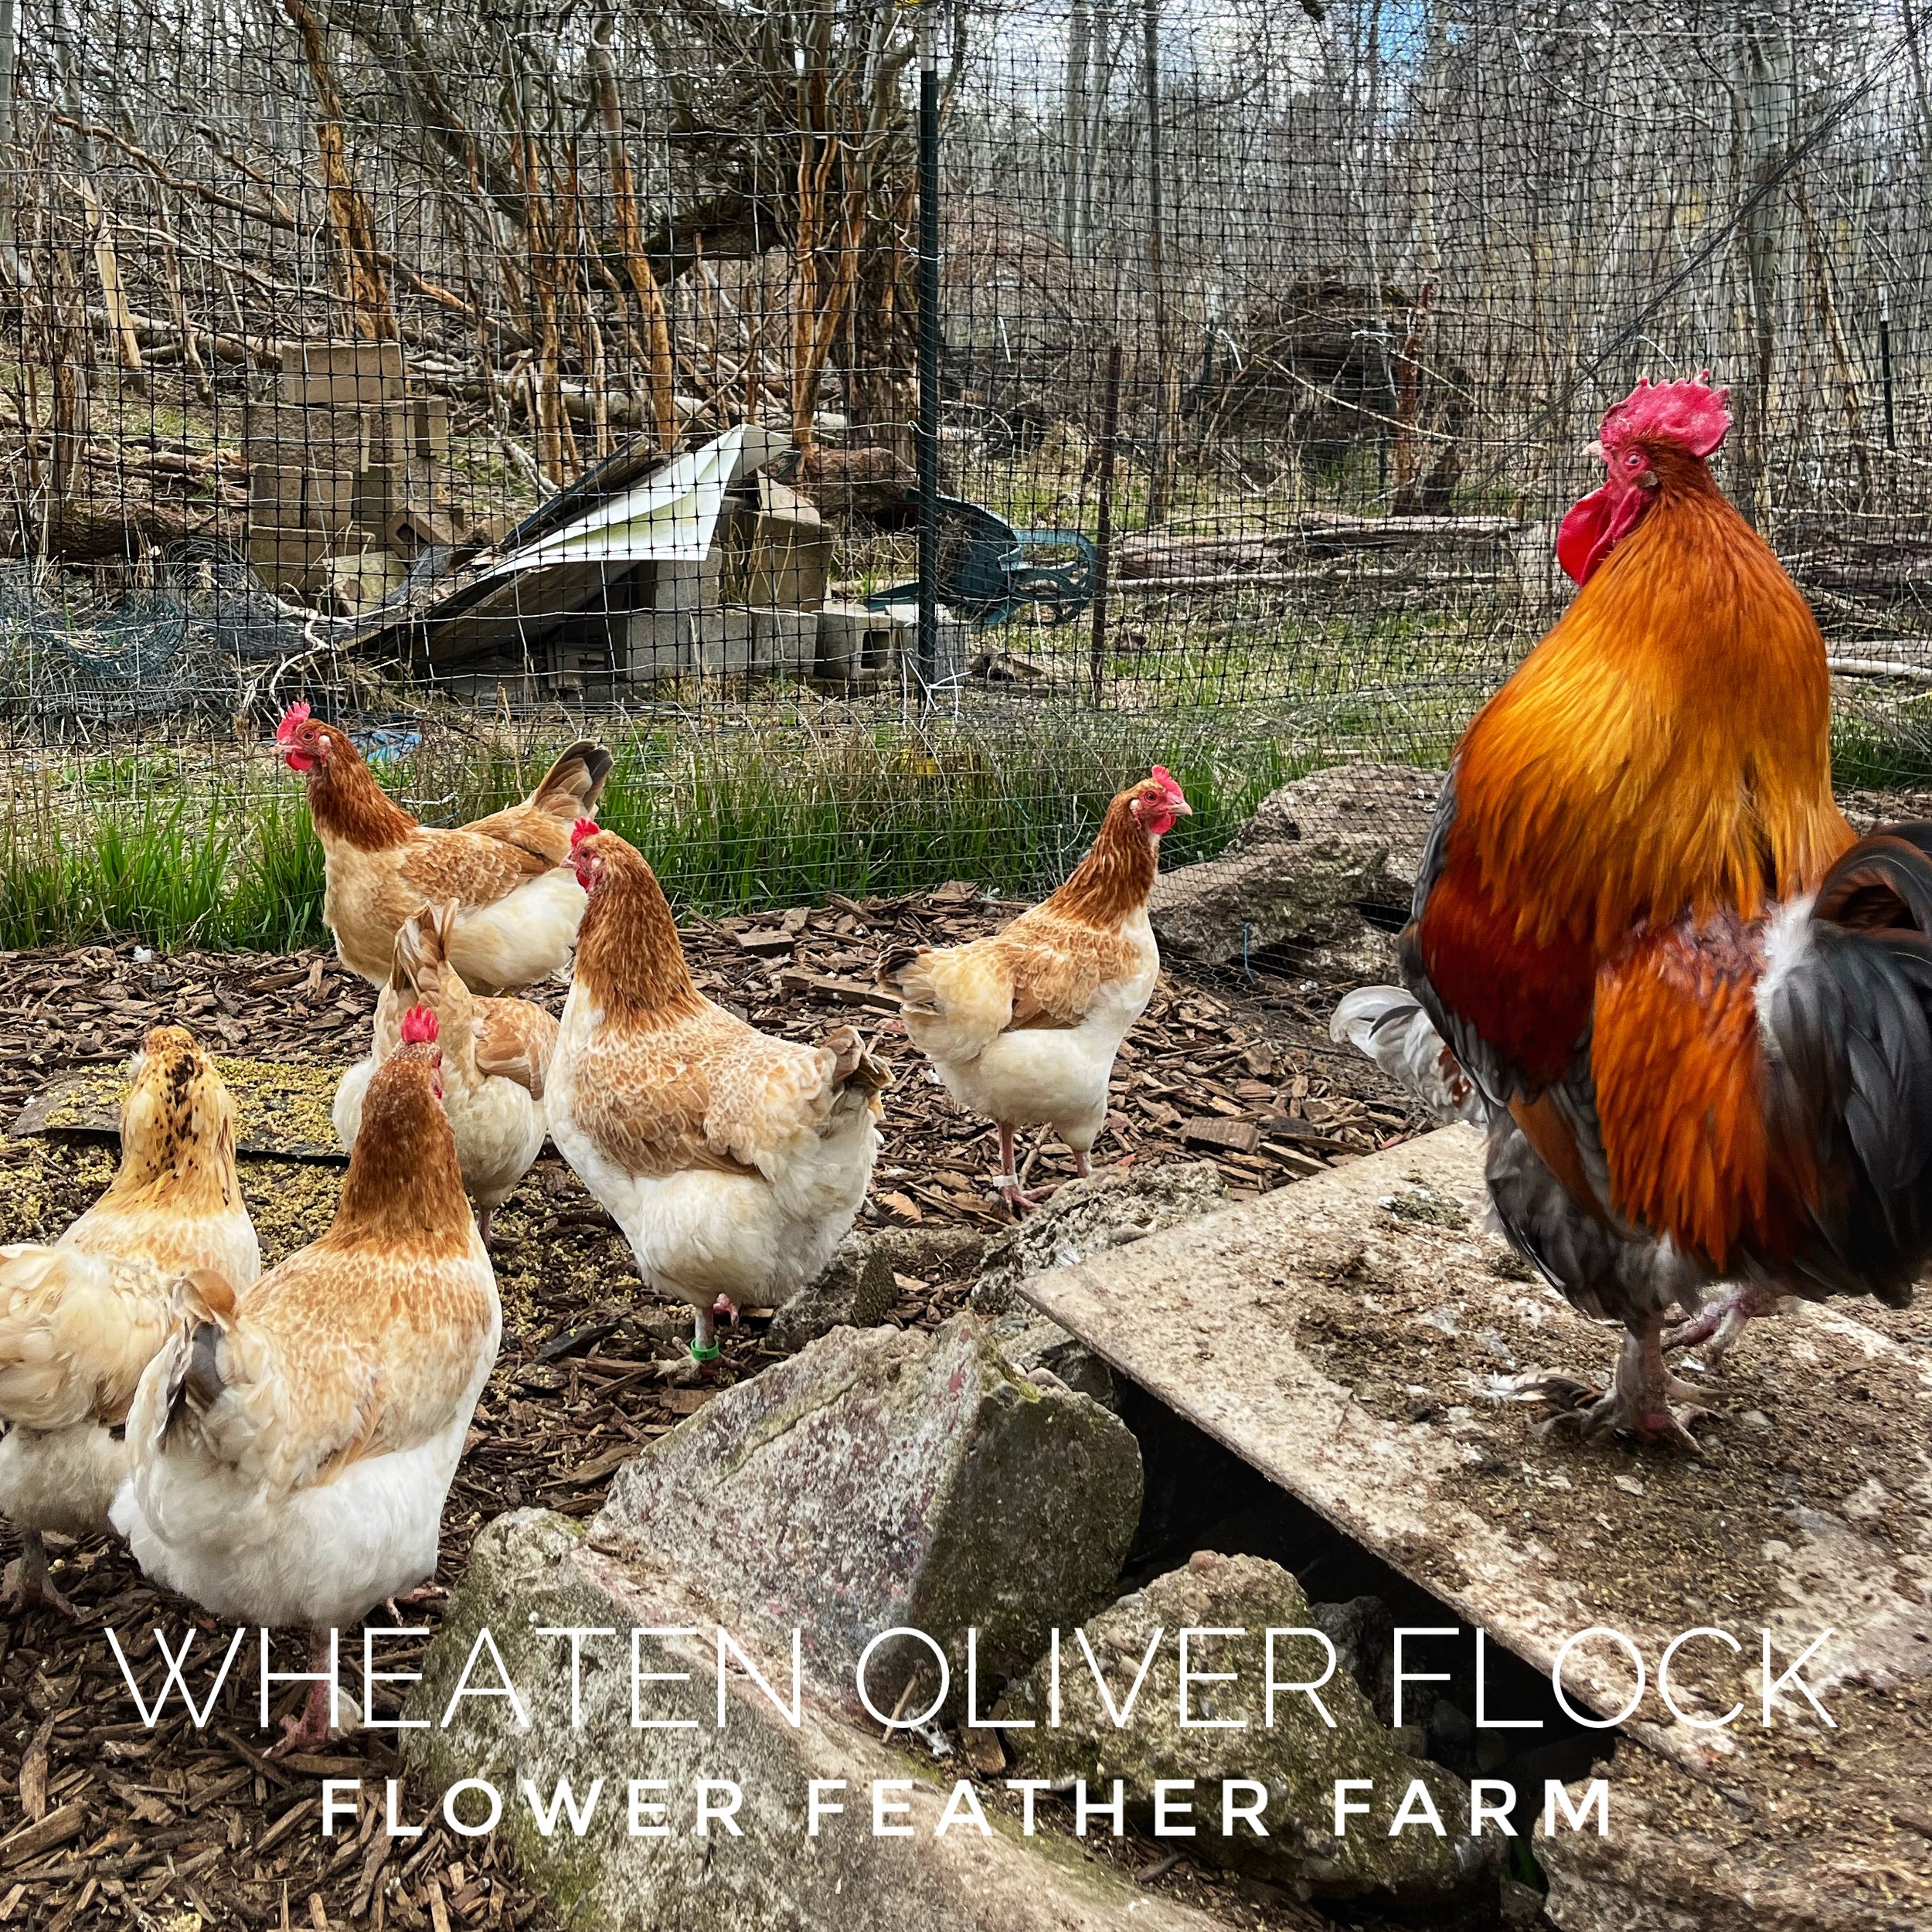 Wheaten Olive Egger Flock at Flower Feather Farm, chicks &amp; dahlias